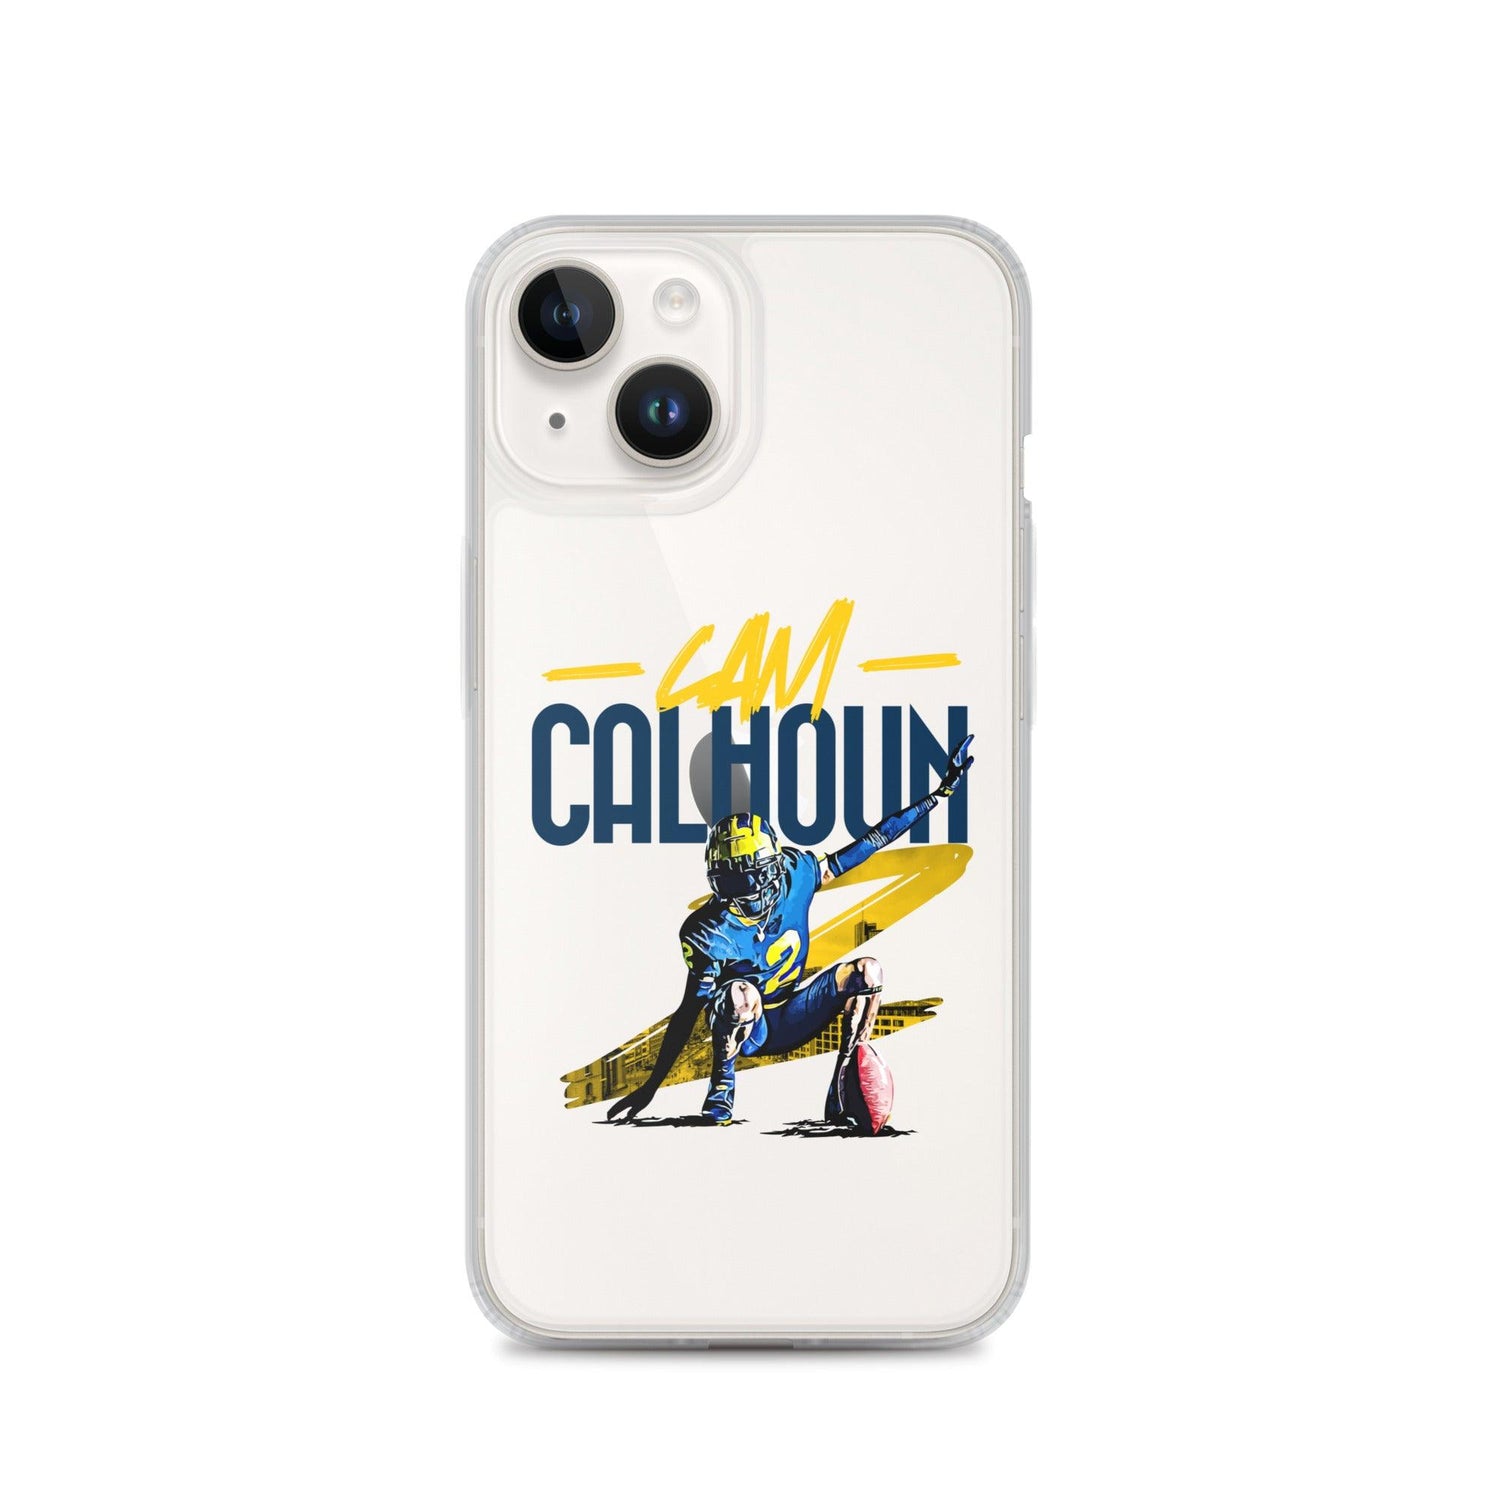 Cameron Calhoun "Gameday" iPhone® - Fan Arch